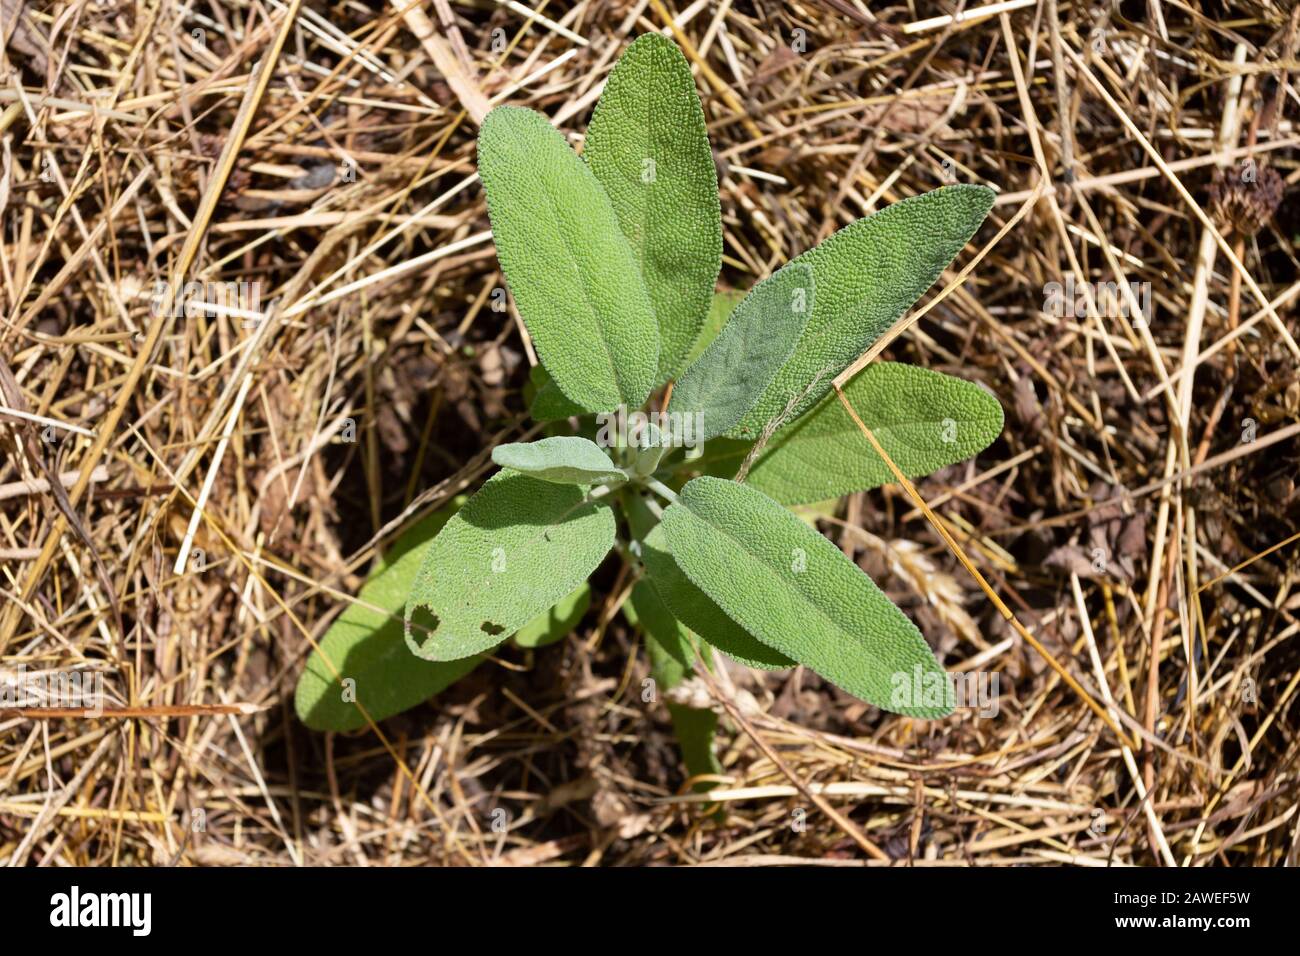 Sage, Kitchen sage, Small Leaf Sage, Garden Sage - Salvia officinalis, growing in a mulch bedding of dried straw. Stock Photo